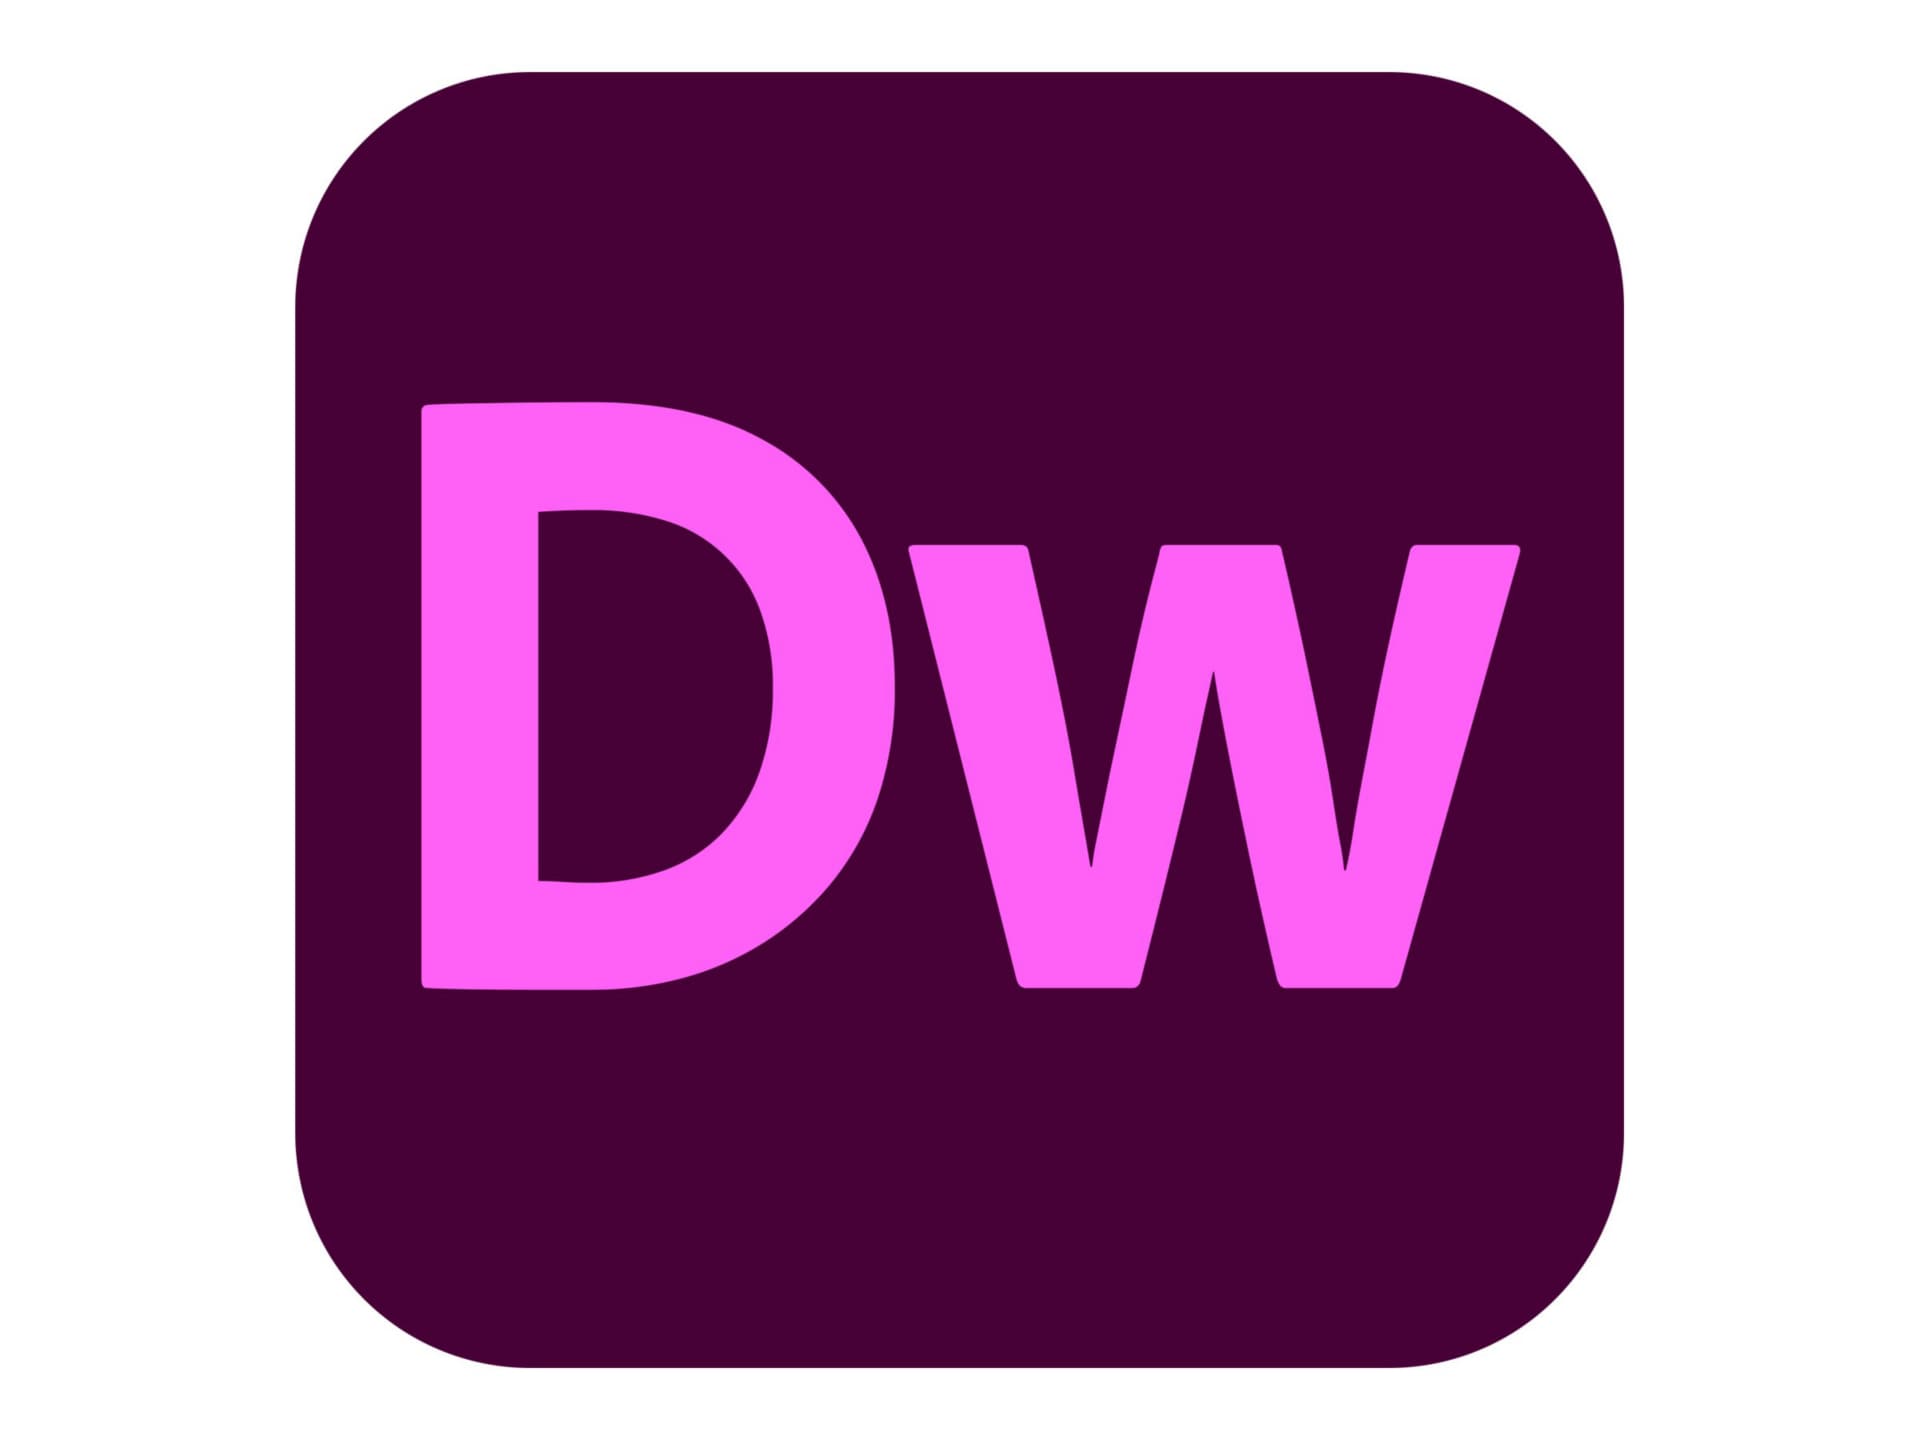 Adobe Dreamweaver Pro for enterprise - Subscription Renewal - 1 user